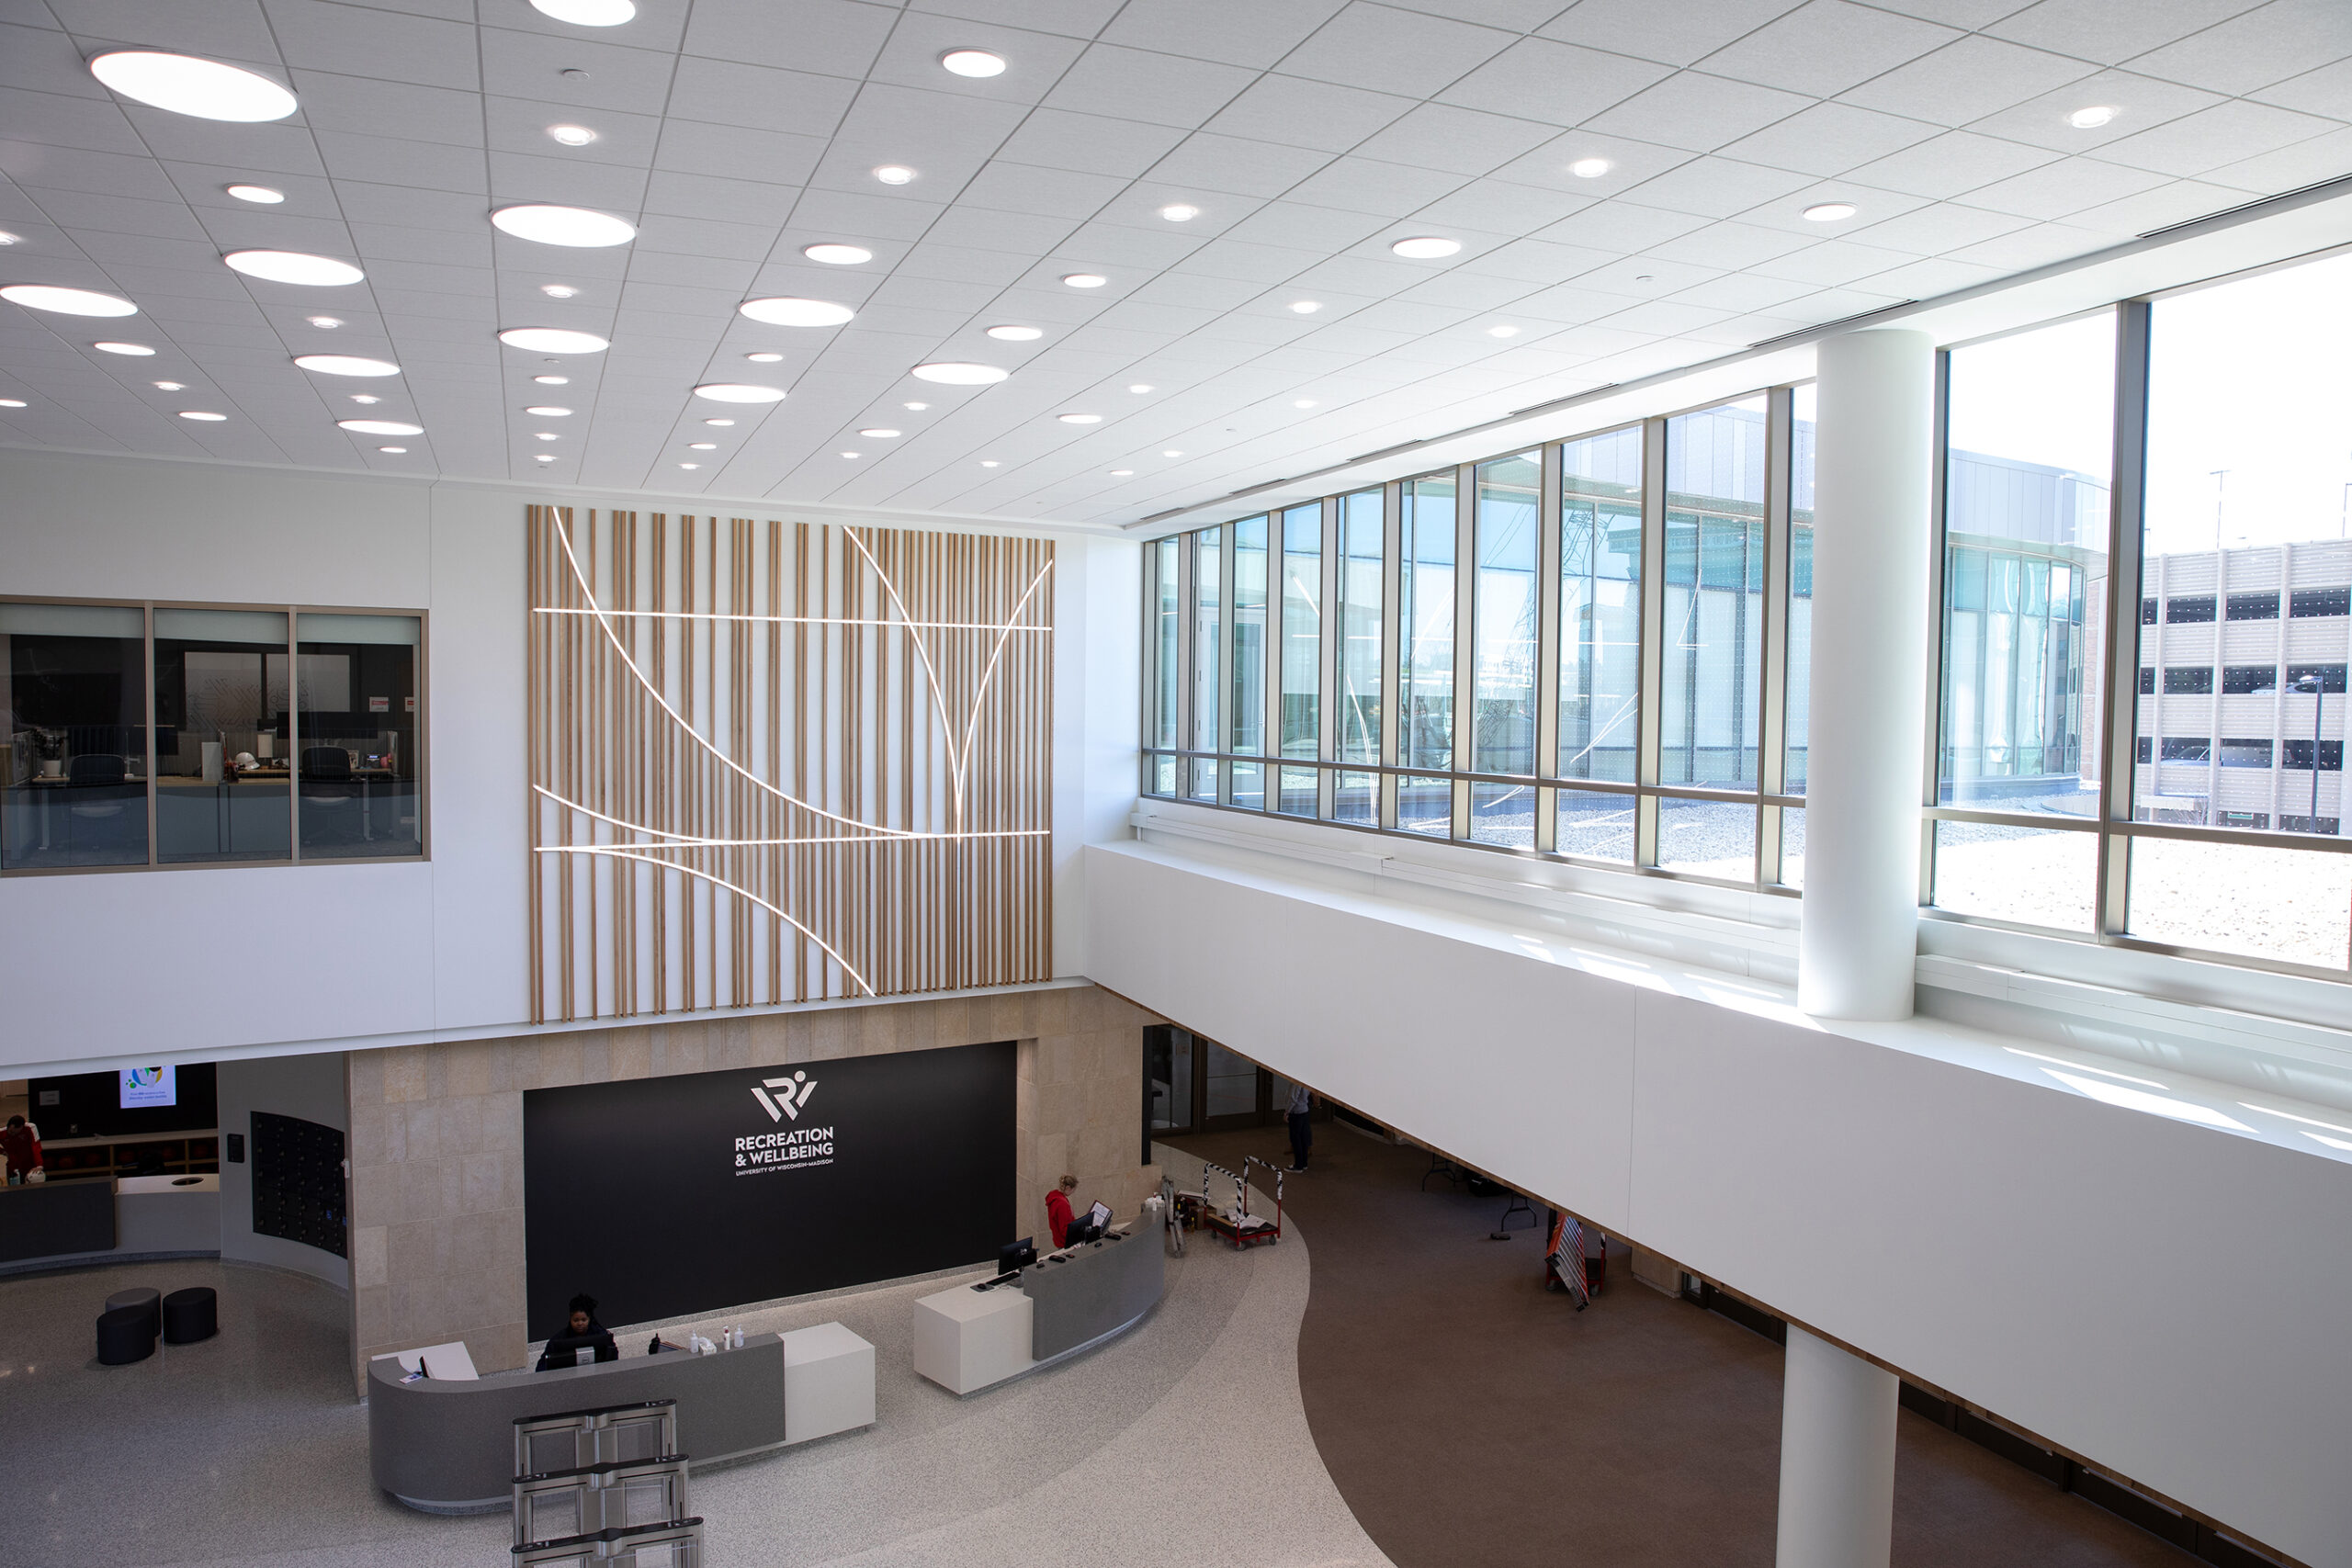 Bakke Recreation & Wellbeing Center Lobby Entrance Feature Wall Wood Slat LED